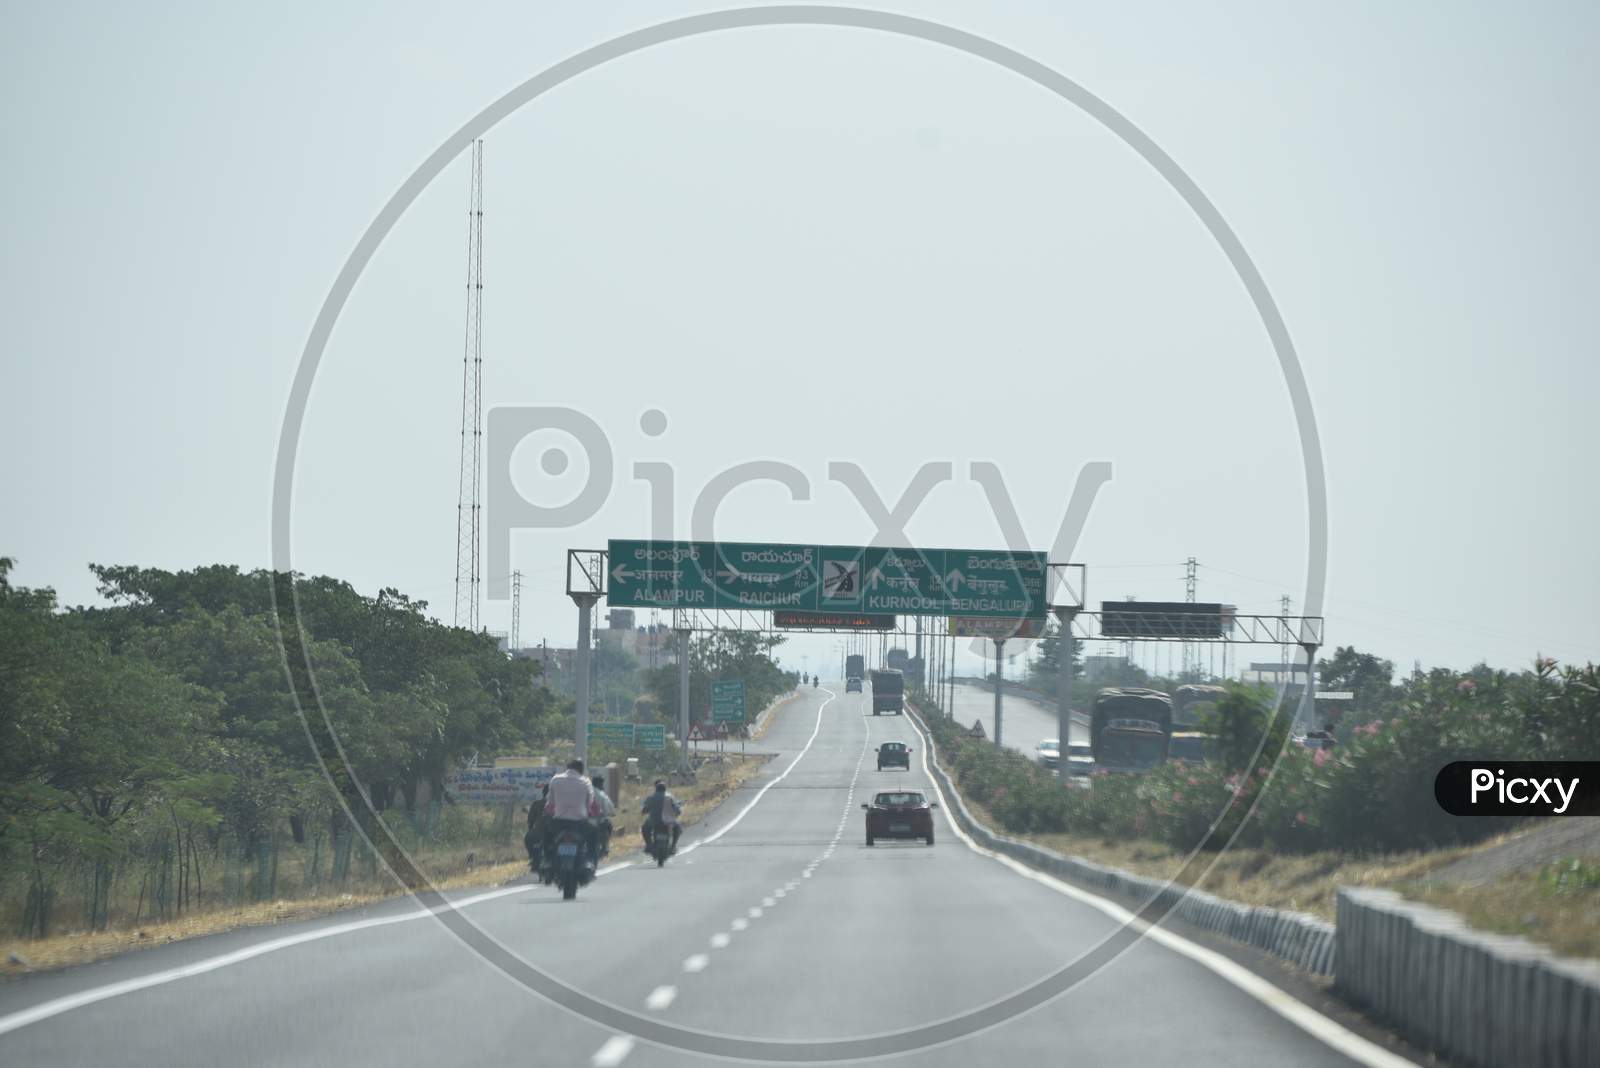 NH 44, Hyderabad- Bangalore Highway, Kurnool.